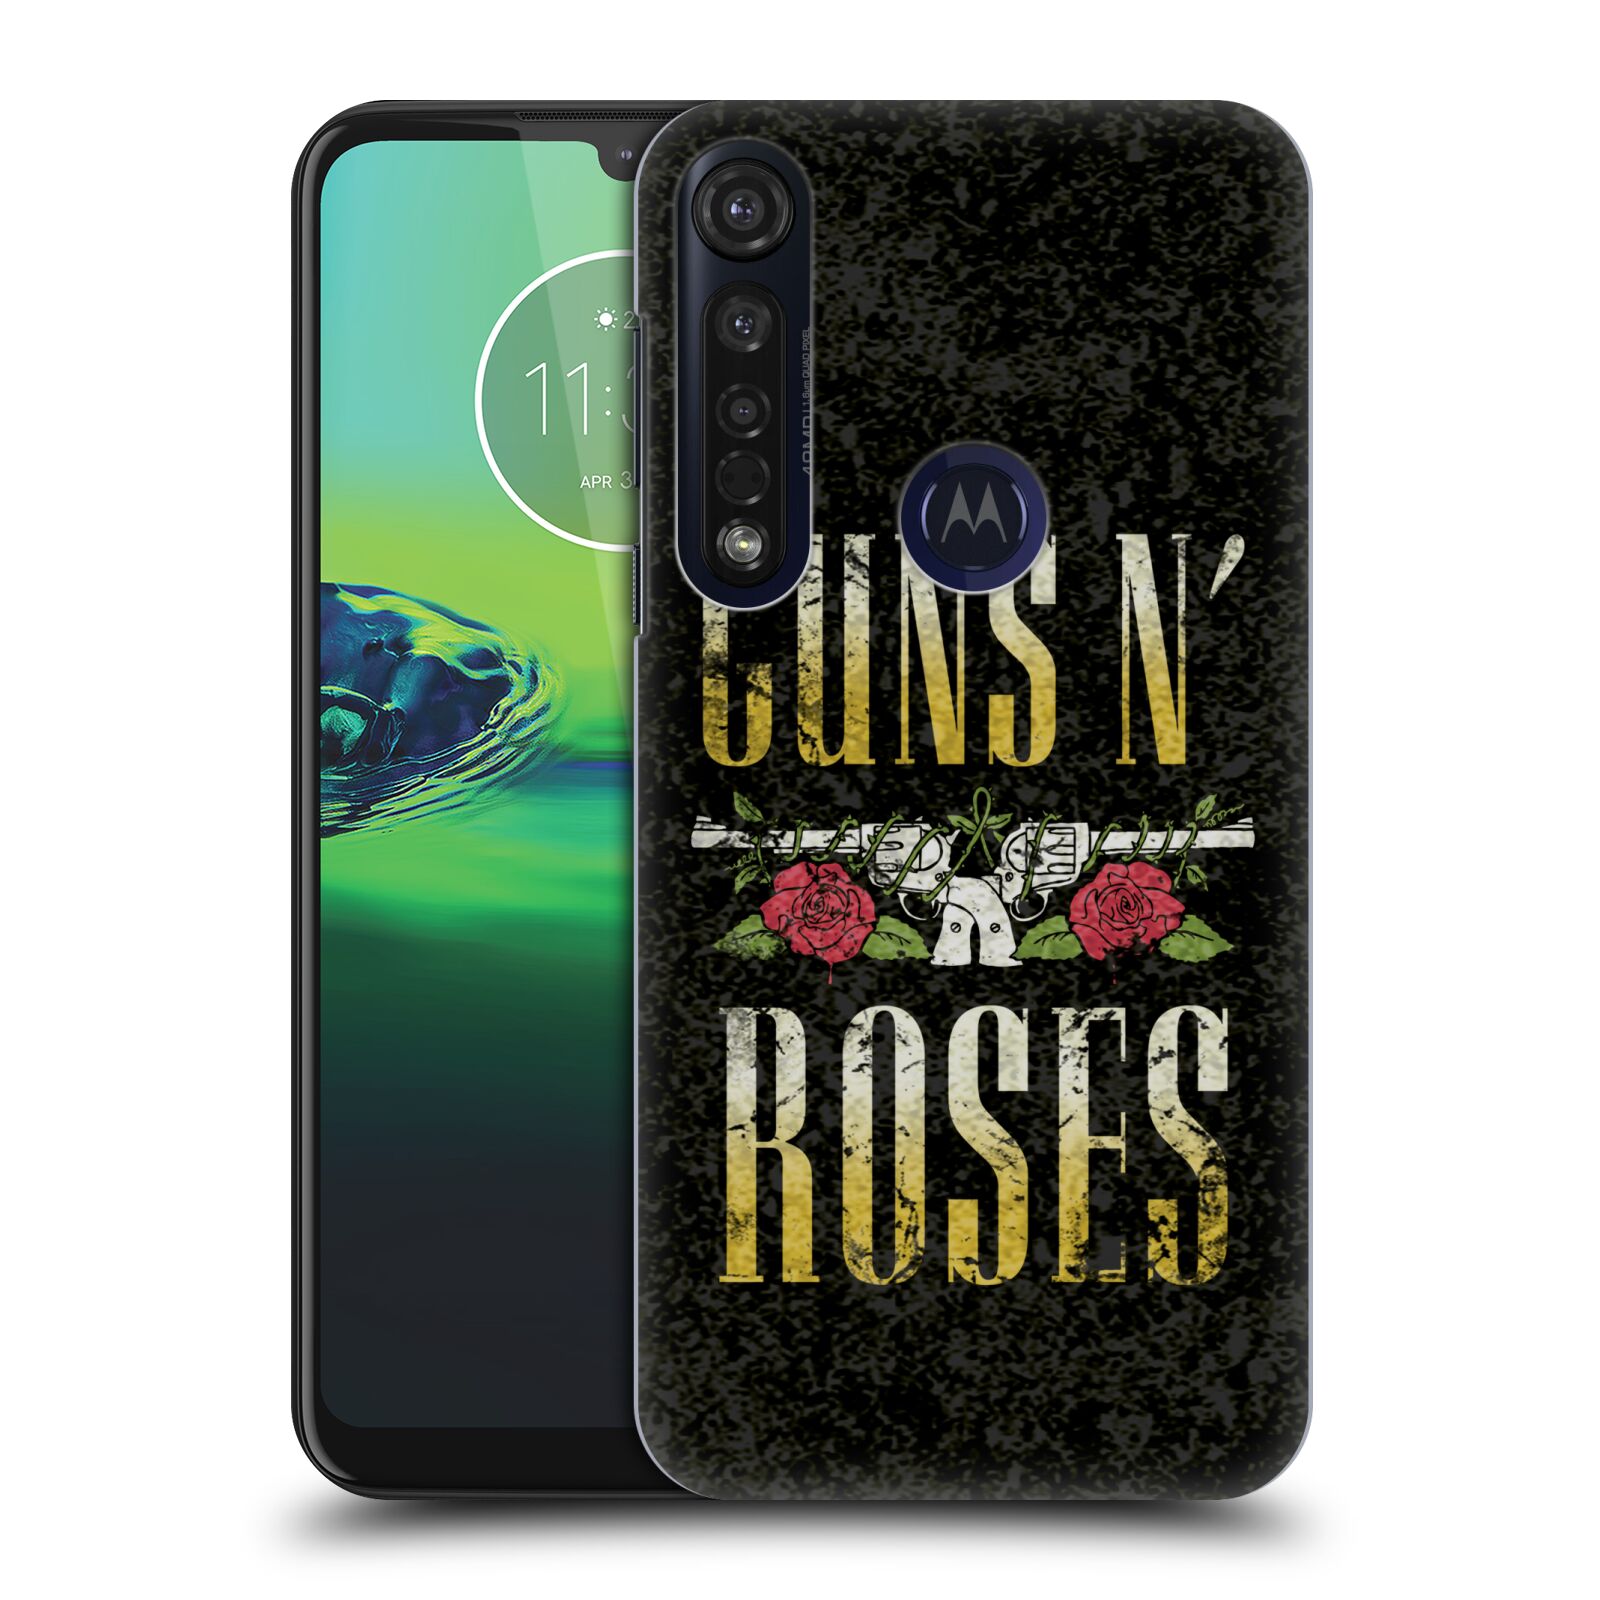 Pouzdro na mobil Motorola Moto G8 PLUS - HEAD CASE - hudební skupina Guns N Roses text